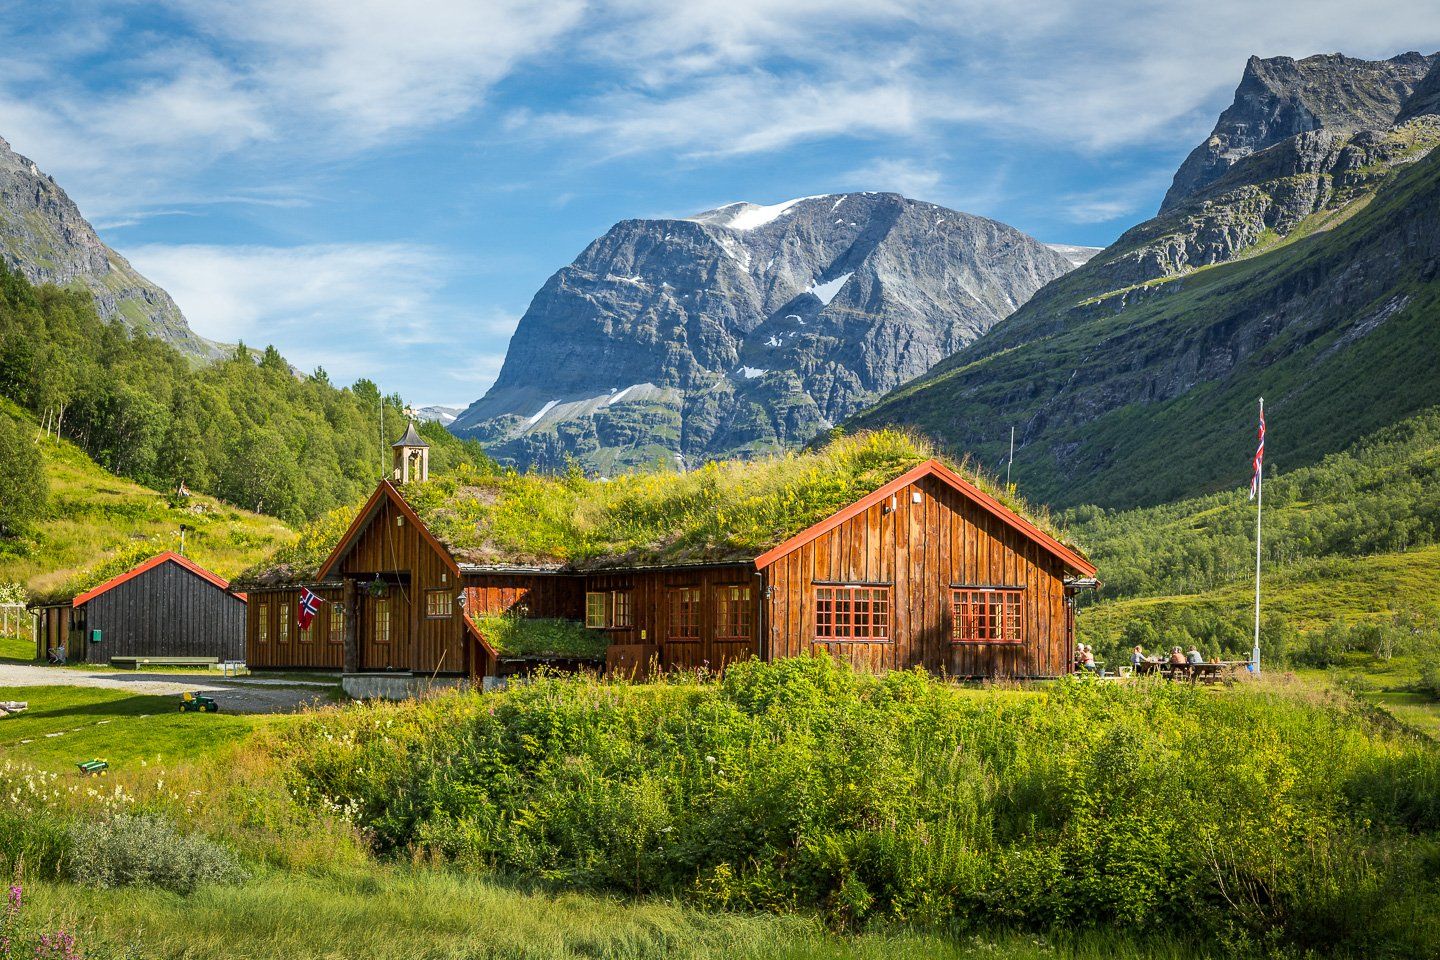 trollheimen,mountains,national park, shelter,cabin,norway,norwegian,nature,outdoor,natural,landscape,architecture, Adrian Szatewicz